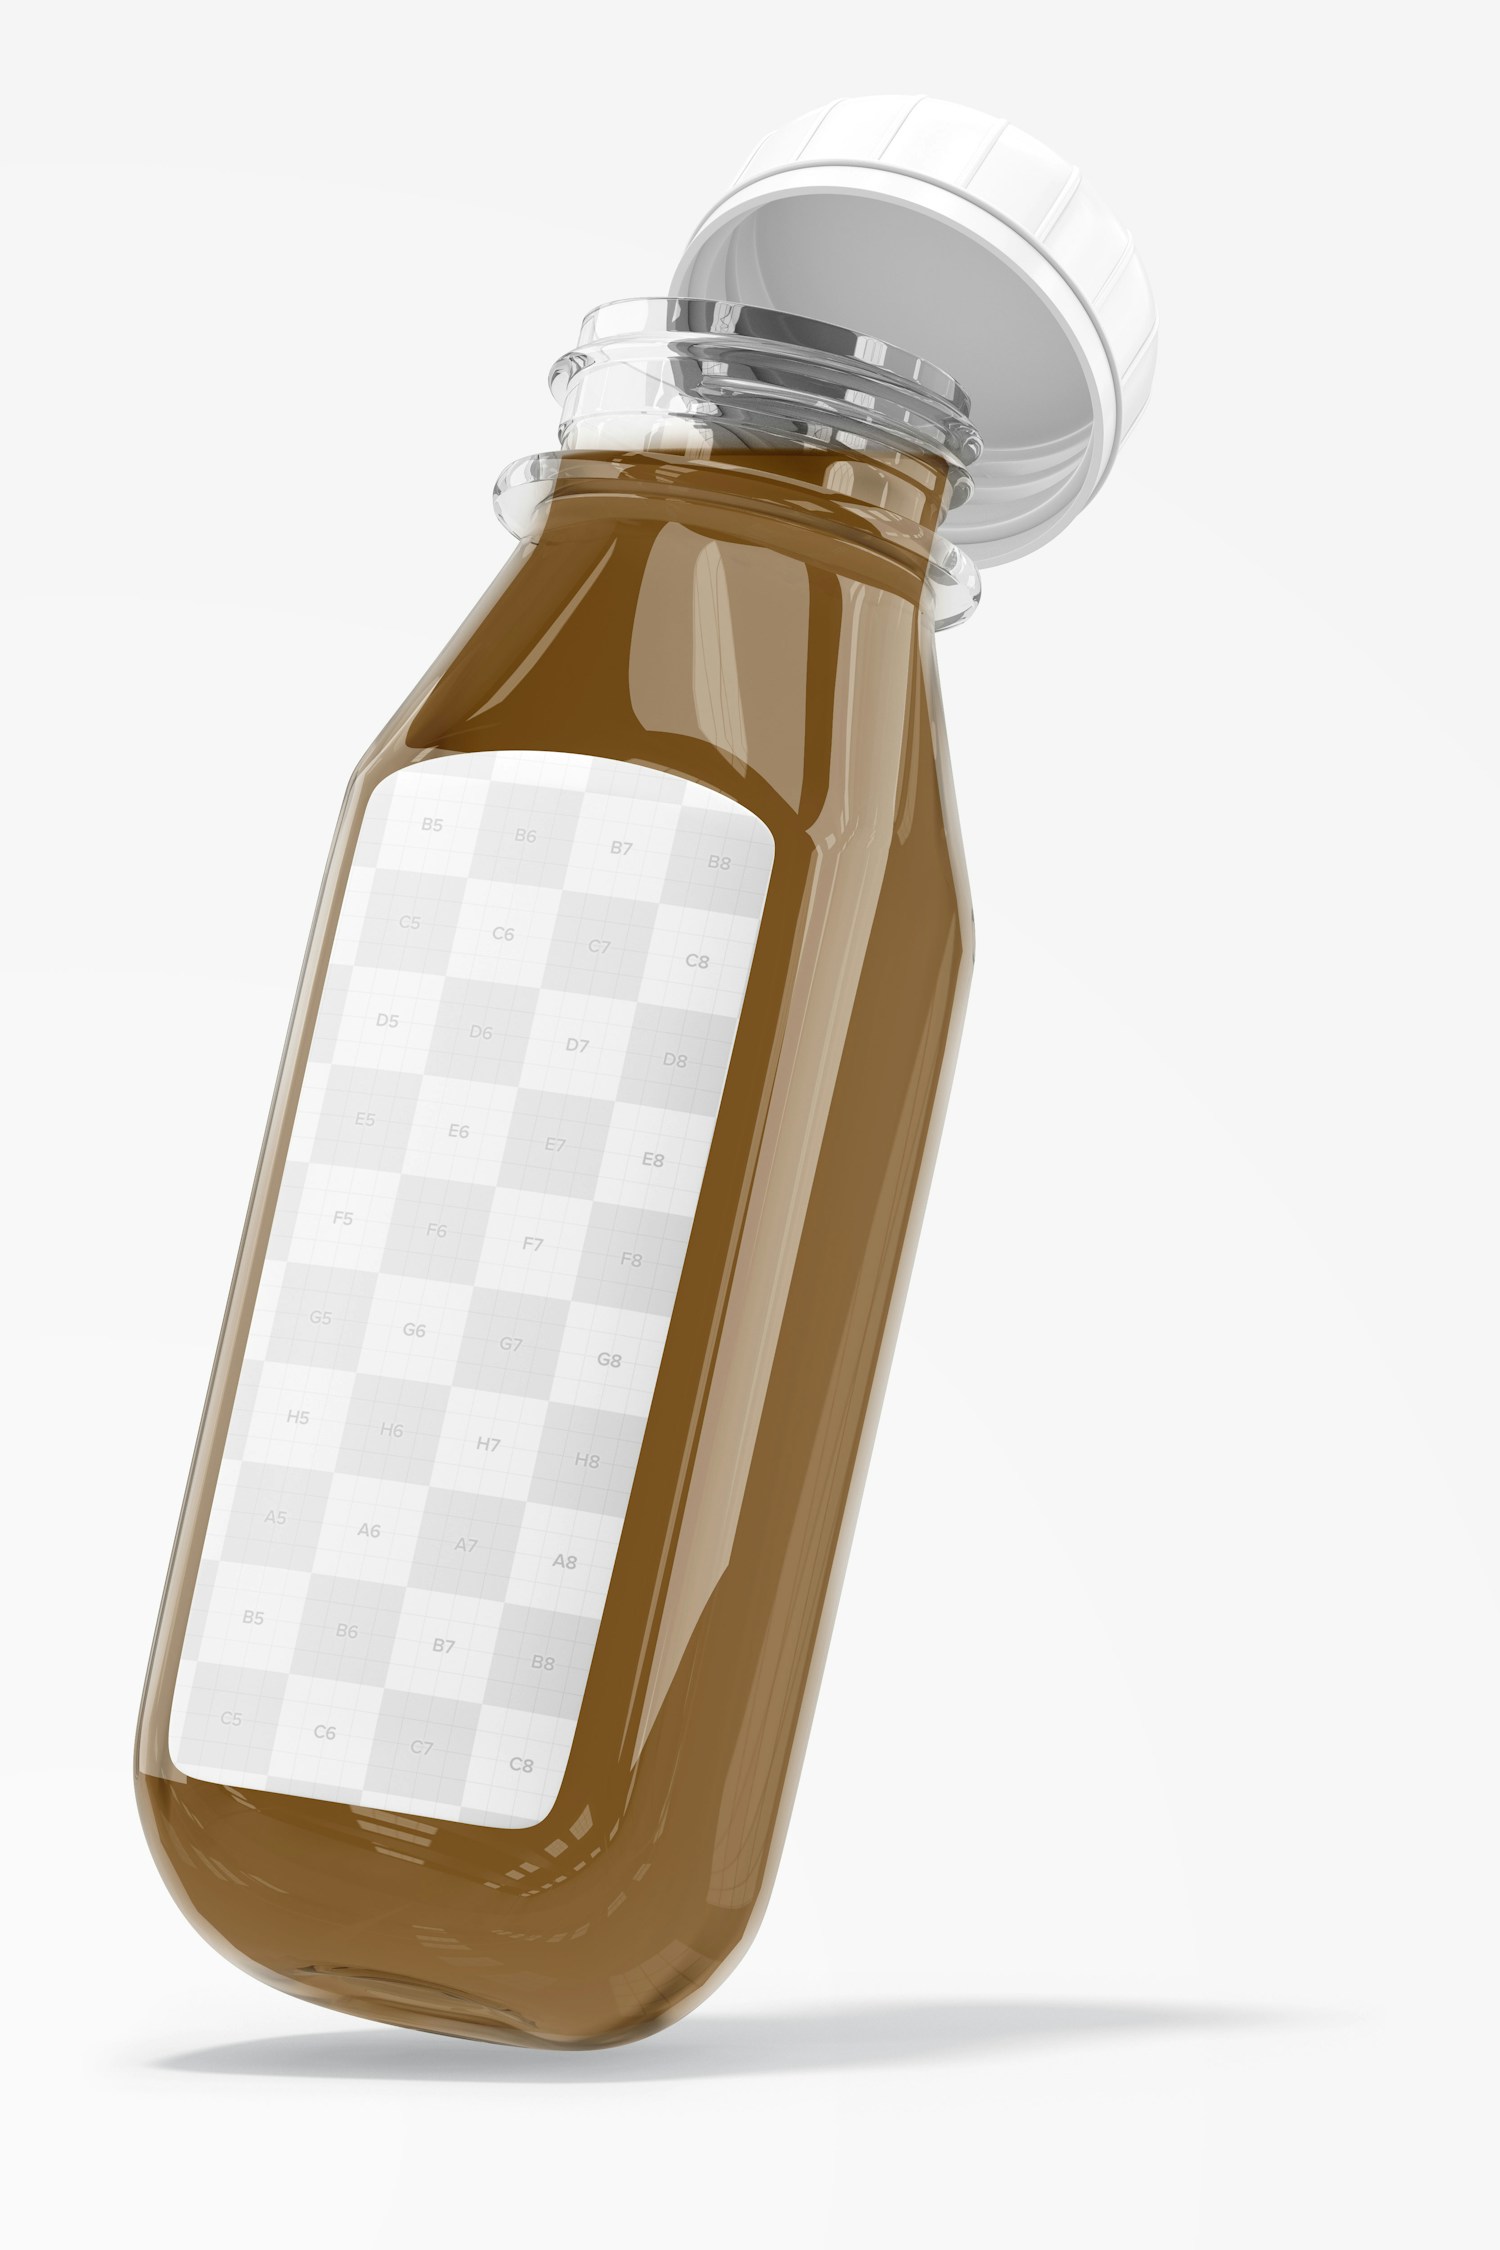 Iced Coffee Glass Bottle Mockup, Leaned